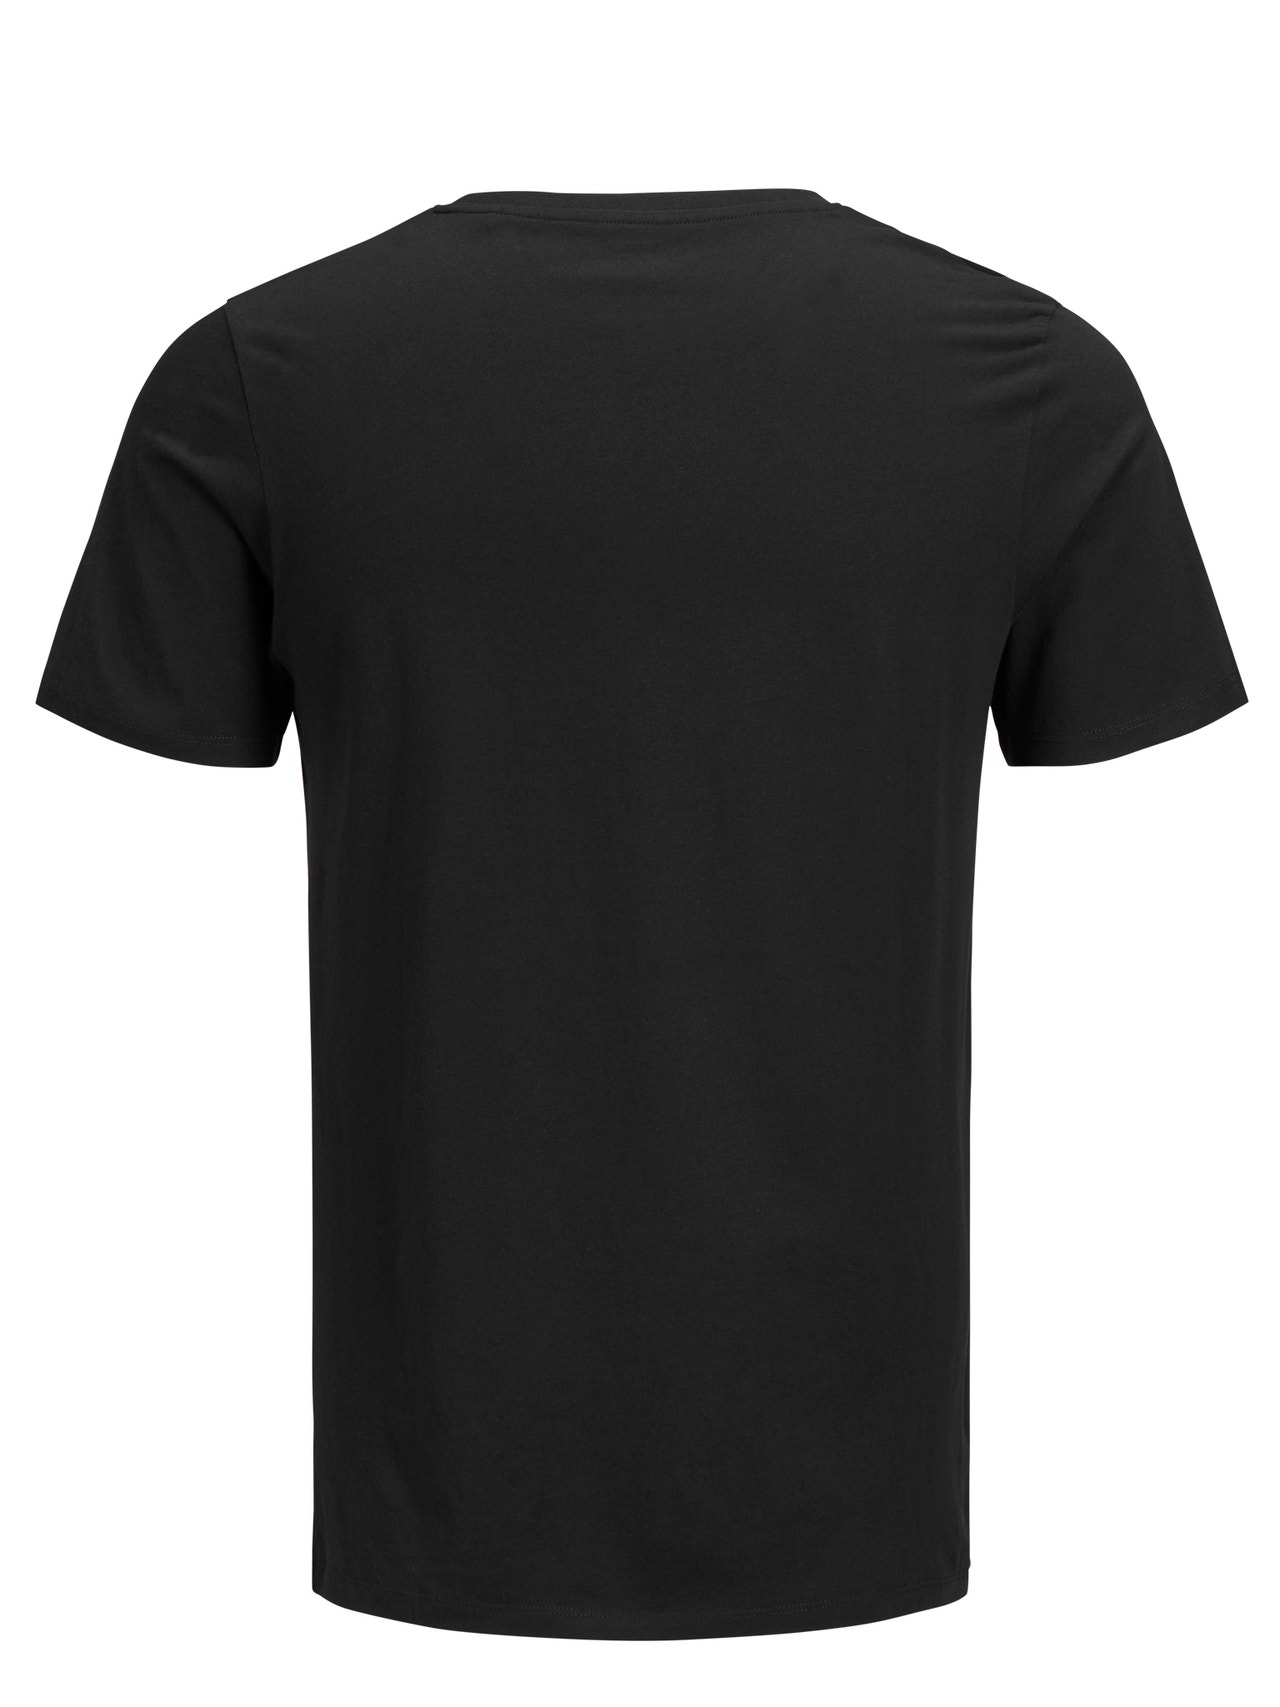 Jack & Jones Logo Rundhals T-shirt -Black - 12137126